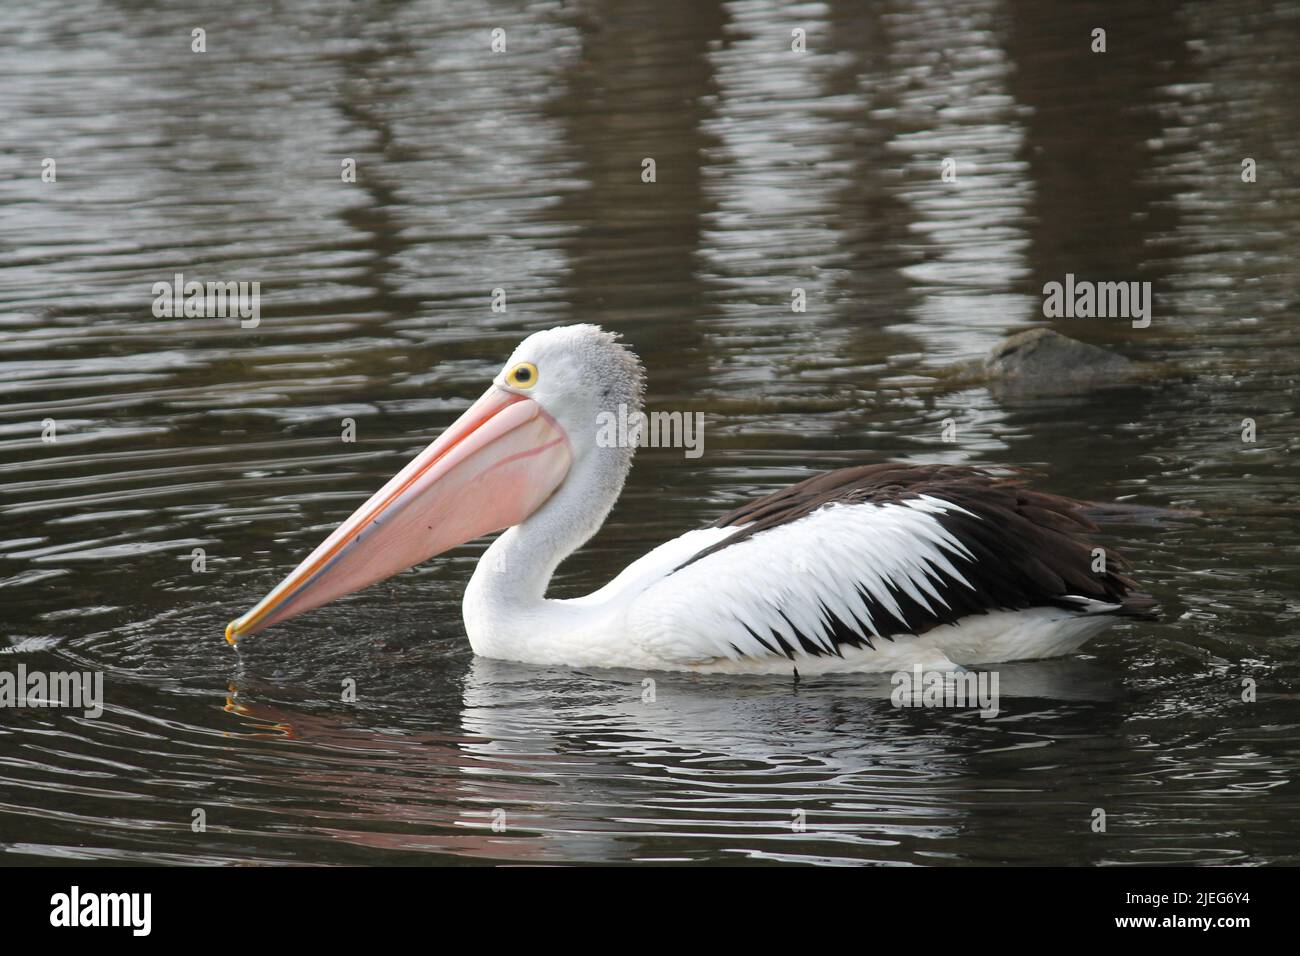 Pelican on water Stock Photo